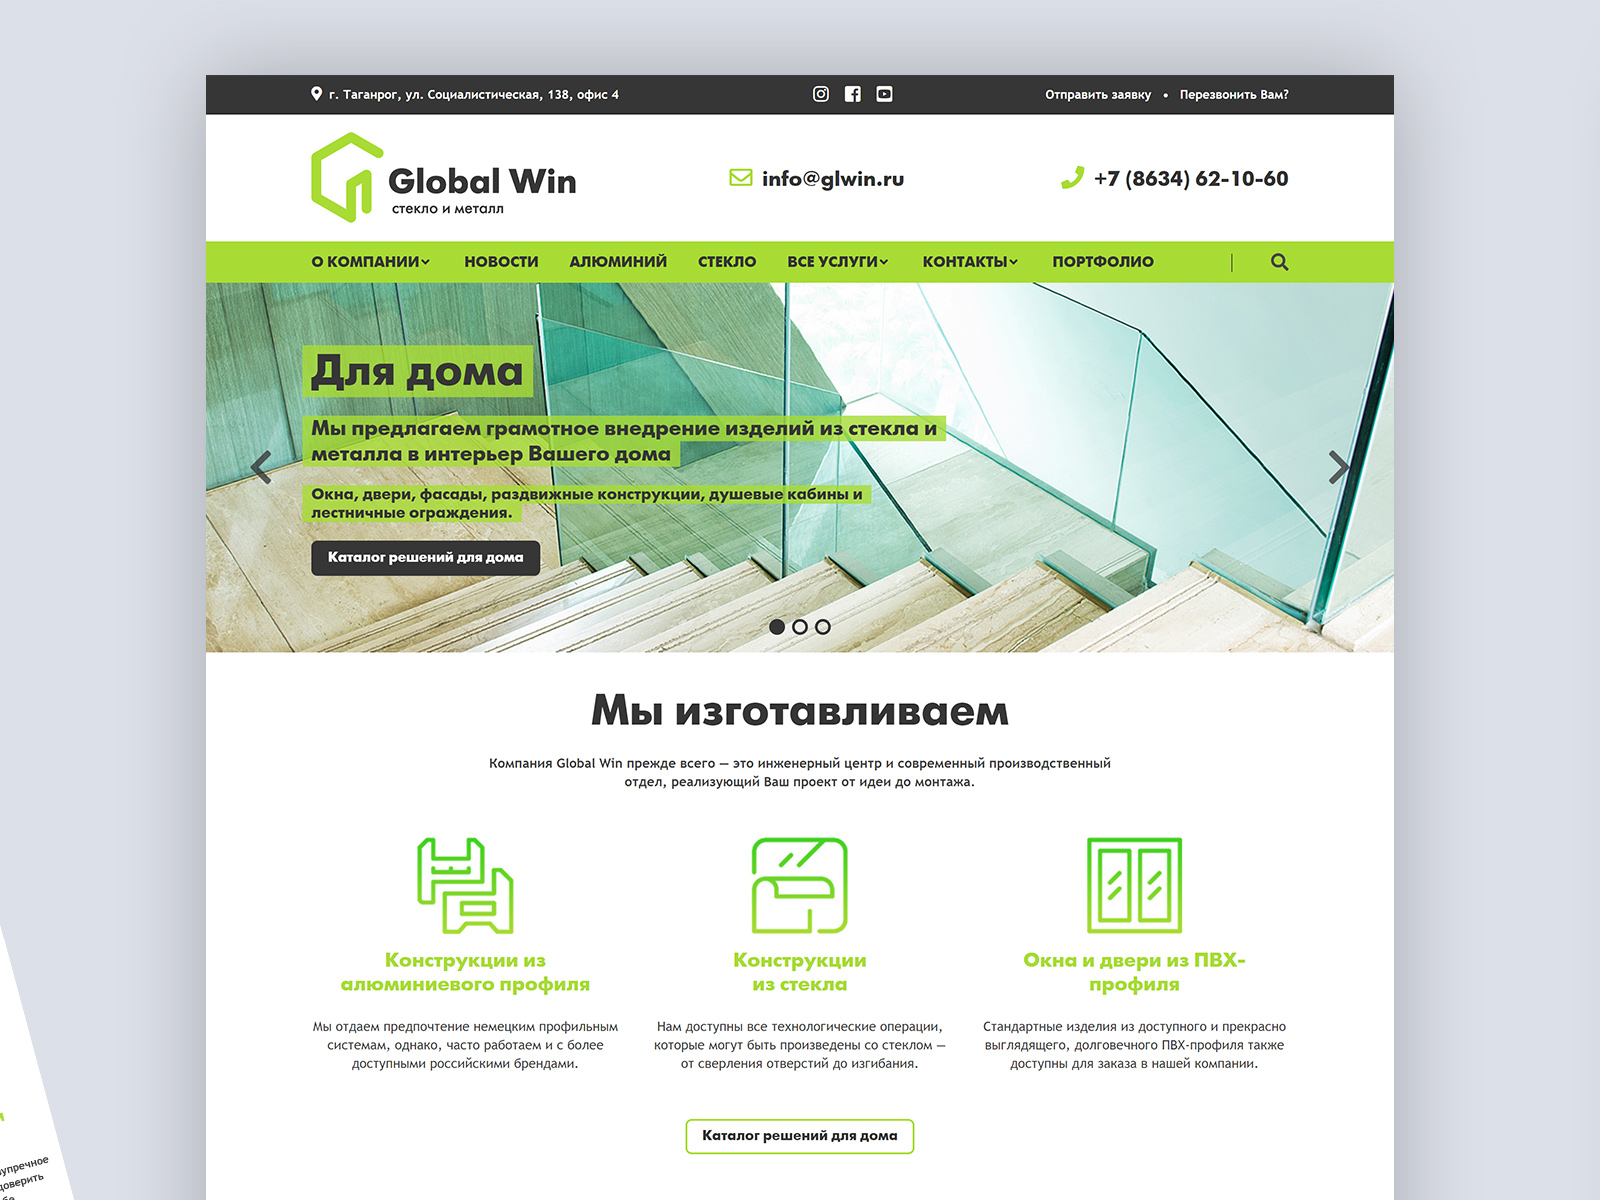 Corporate website and portfolio of Global Win